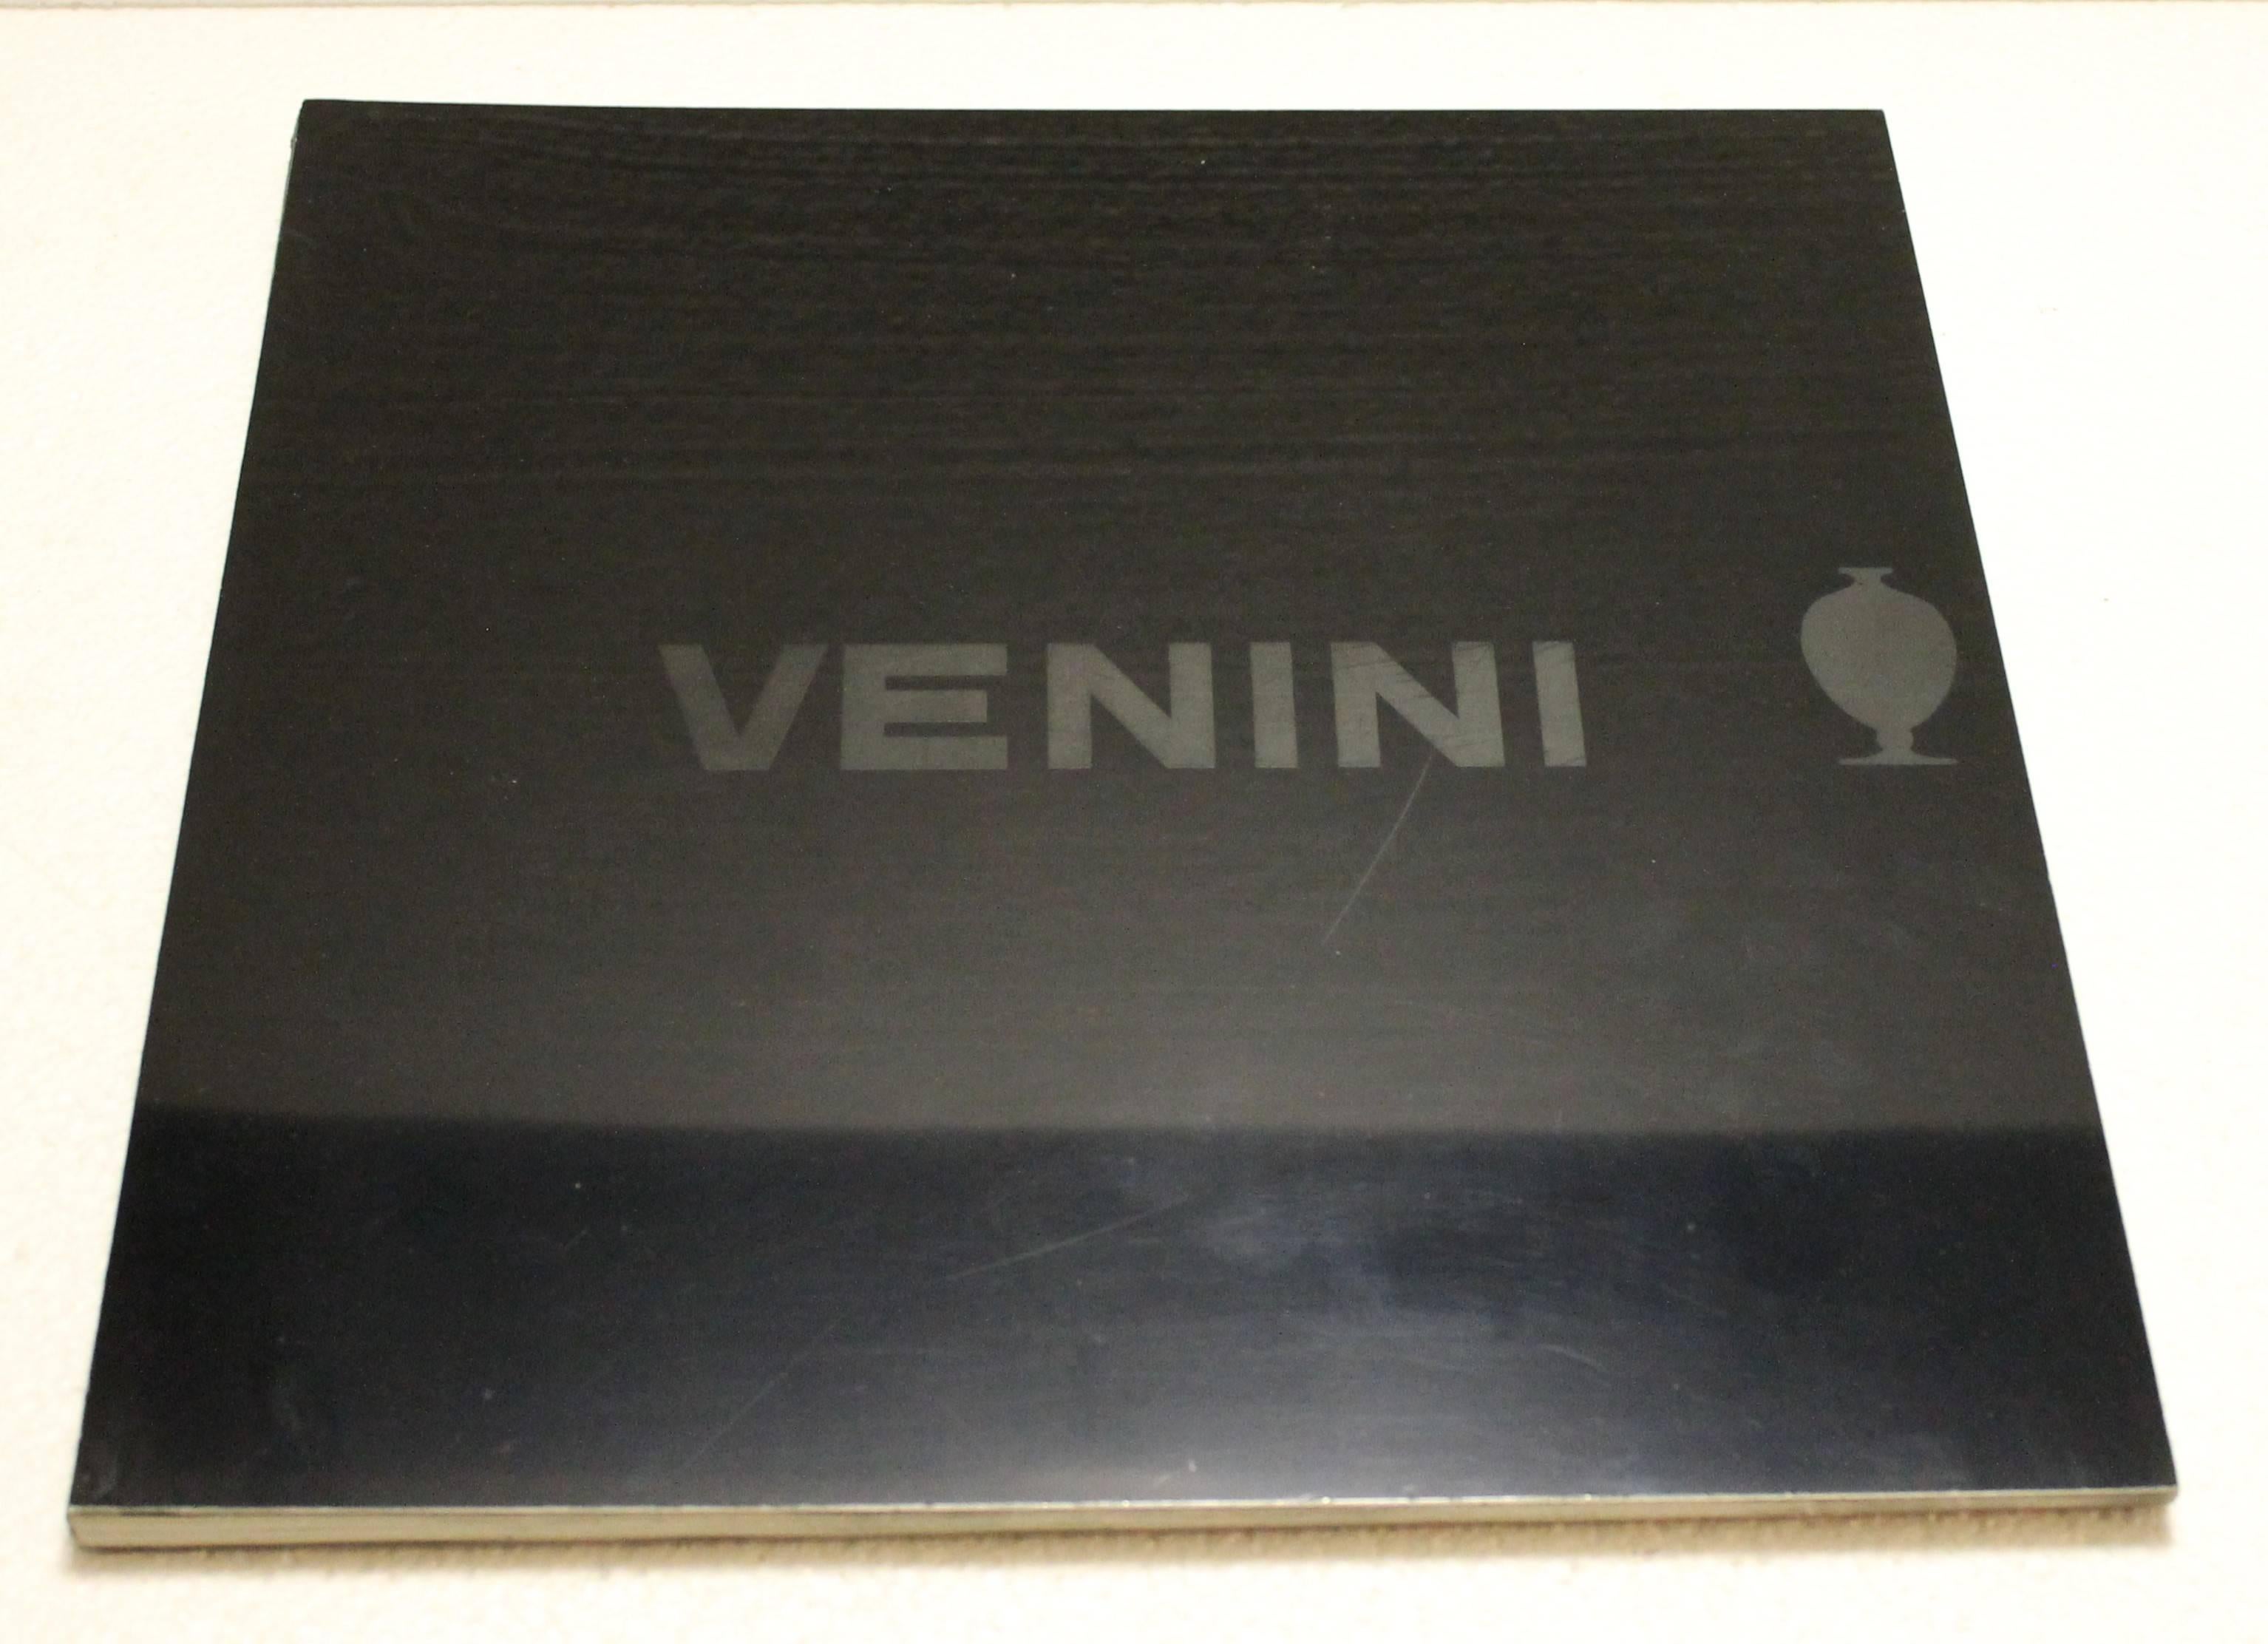 Venini book, 500 limited edition copies ed. 1978- 

Black aluminium cover 135 fine color illustrations.